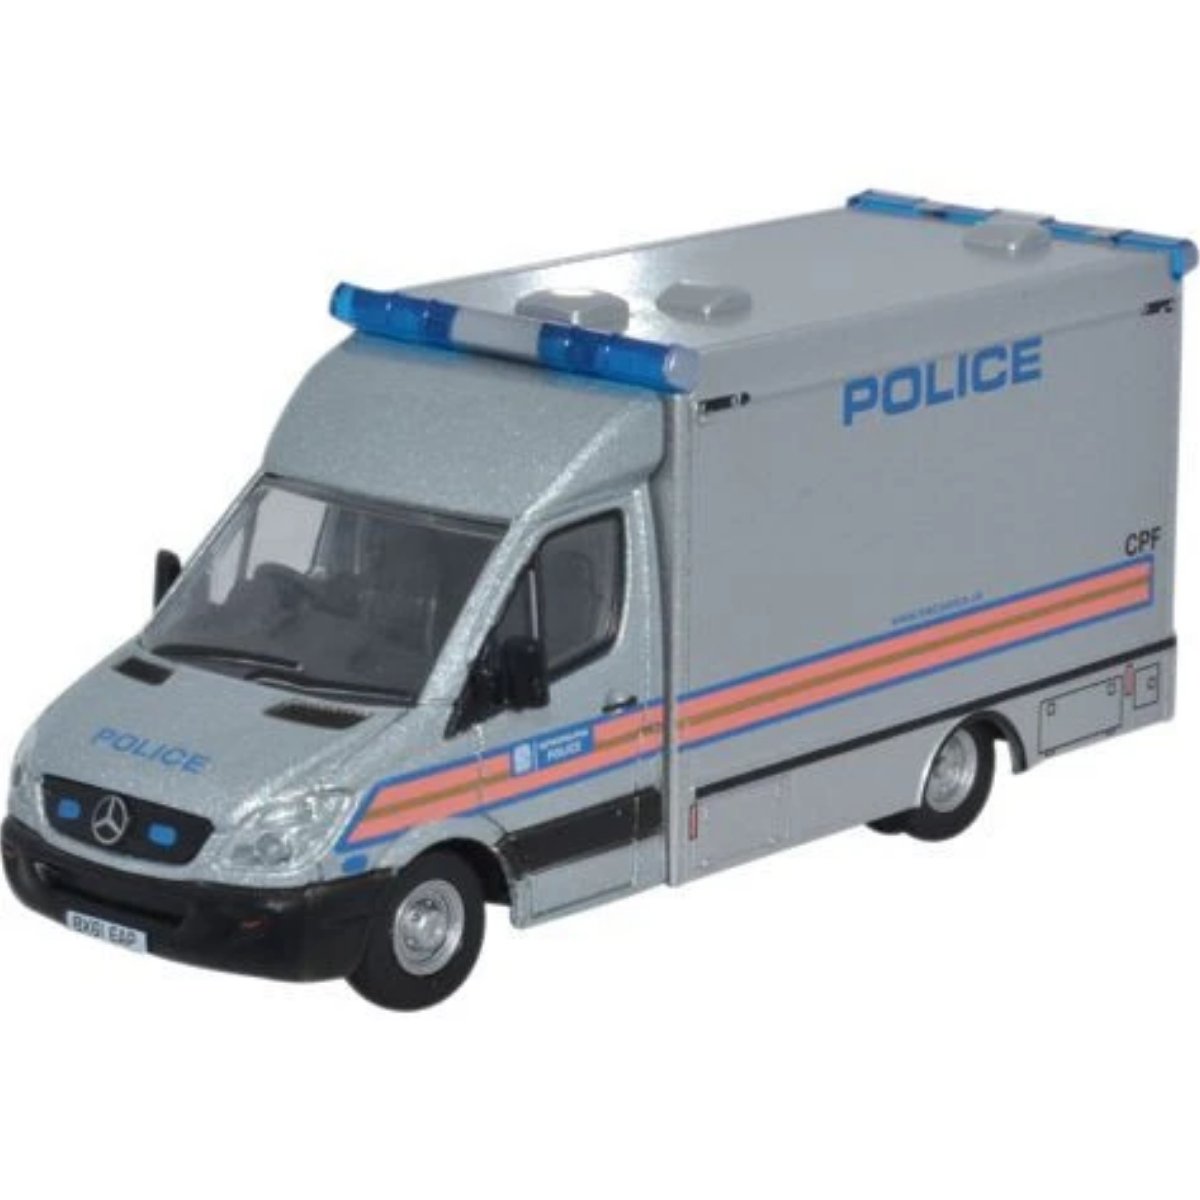 Oxford Diecast 76MA003 Mercedes Explosives Ordnance Disposal Police - Phillips Hobbies